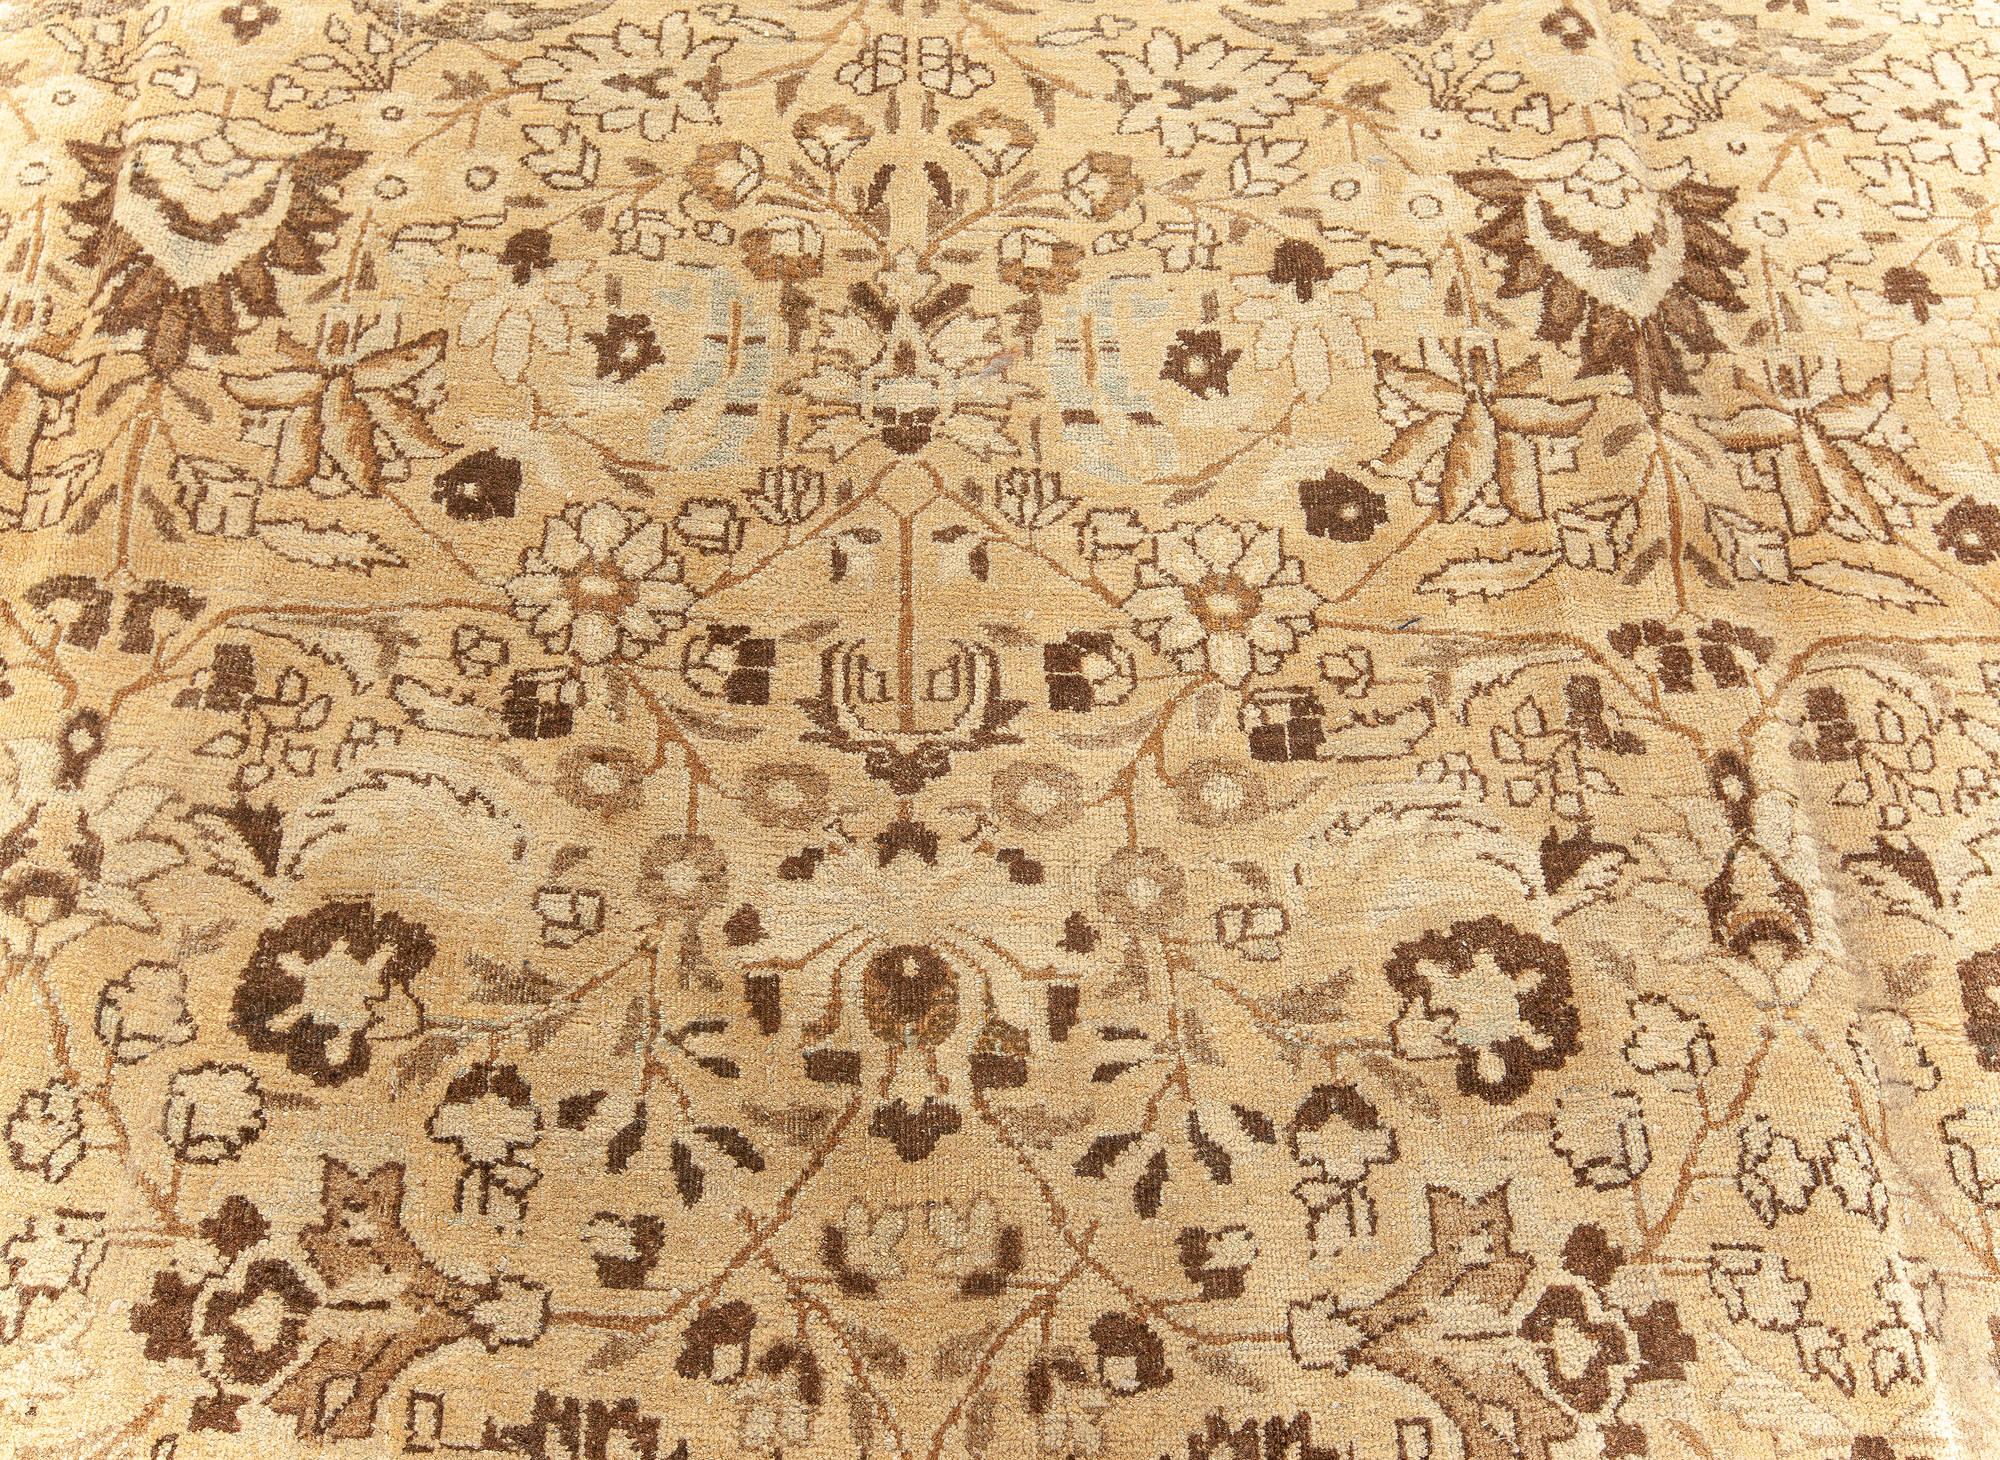 Antique Persian Meshad handmade wool rug
Size: 9'6